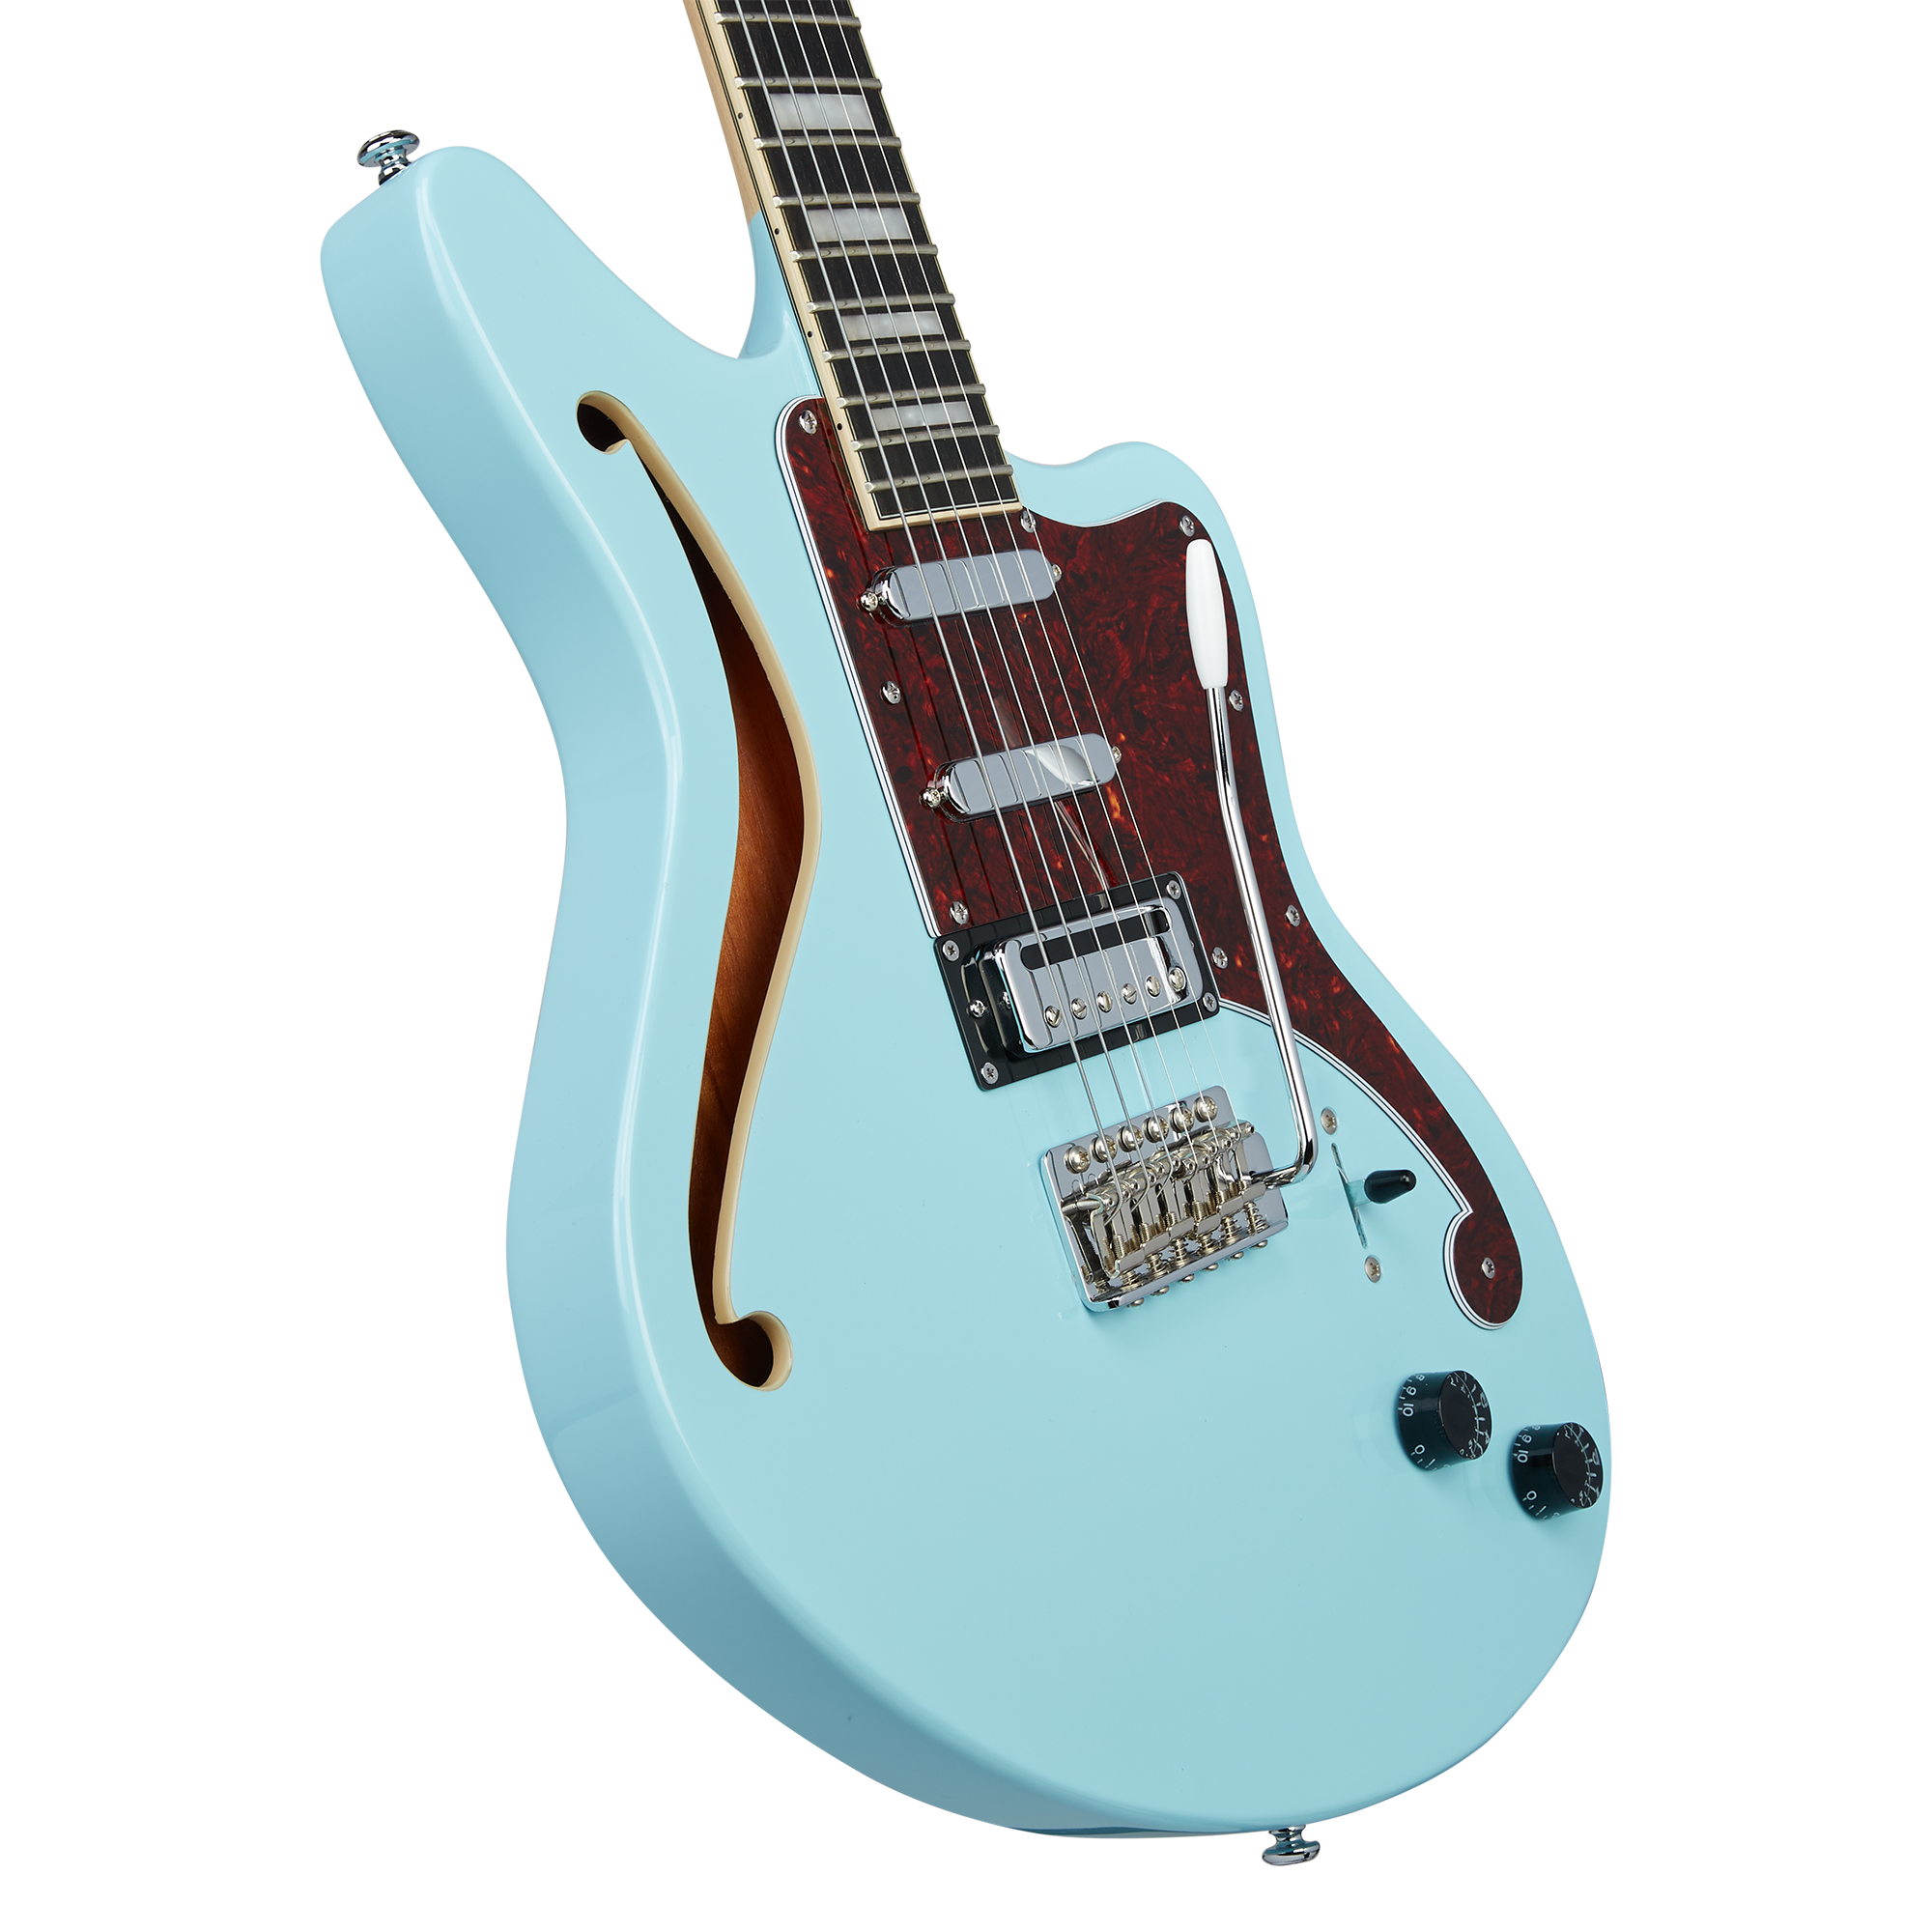 Premier Bedford SH - D'Angelico Guitars